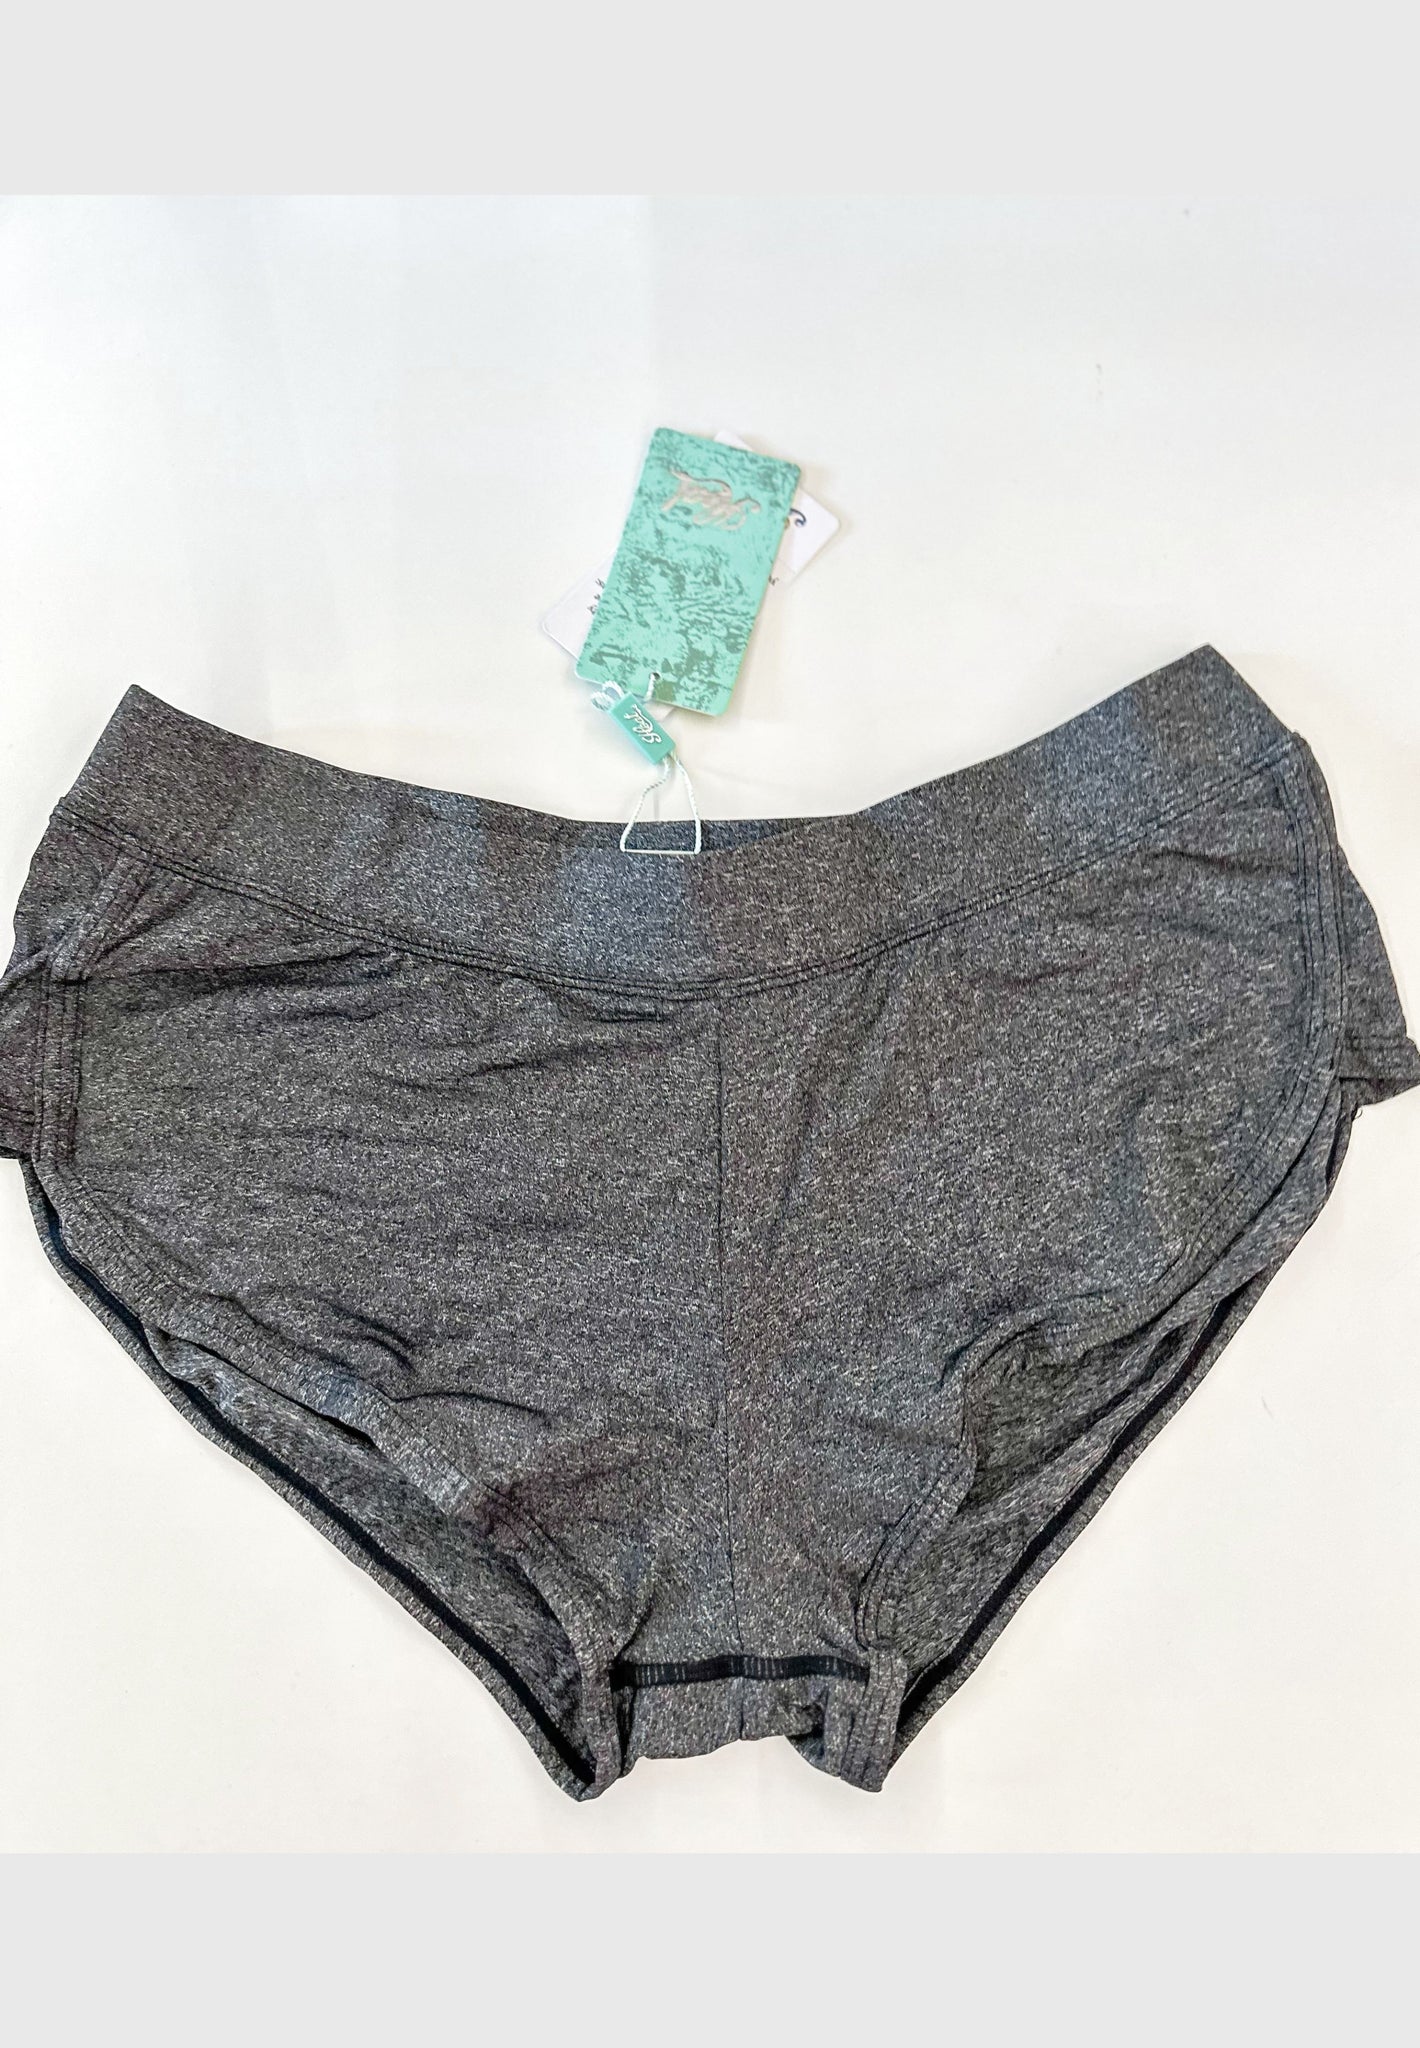 Metallic gray swim shorts, S or M